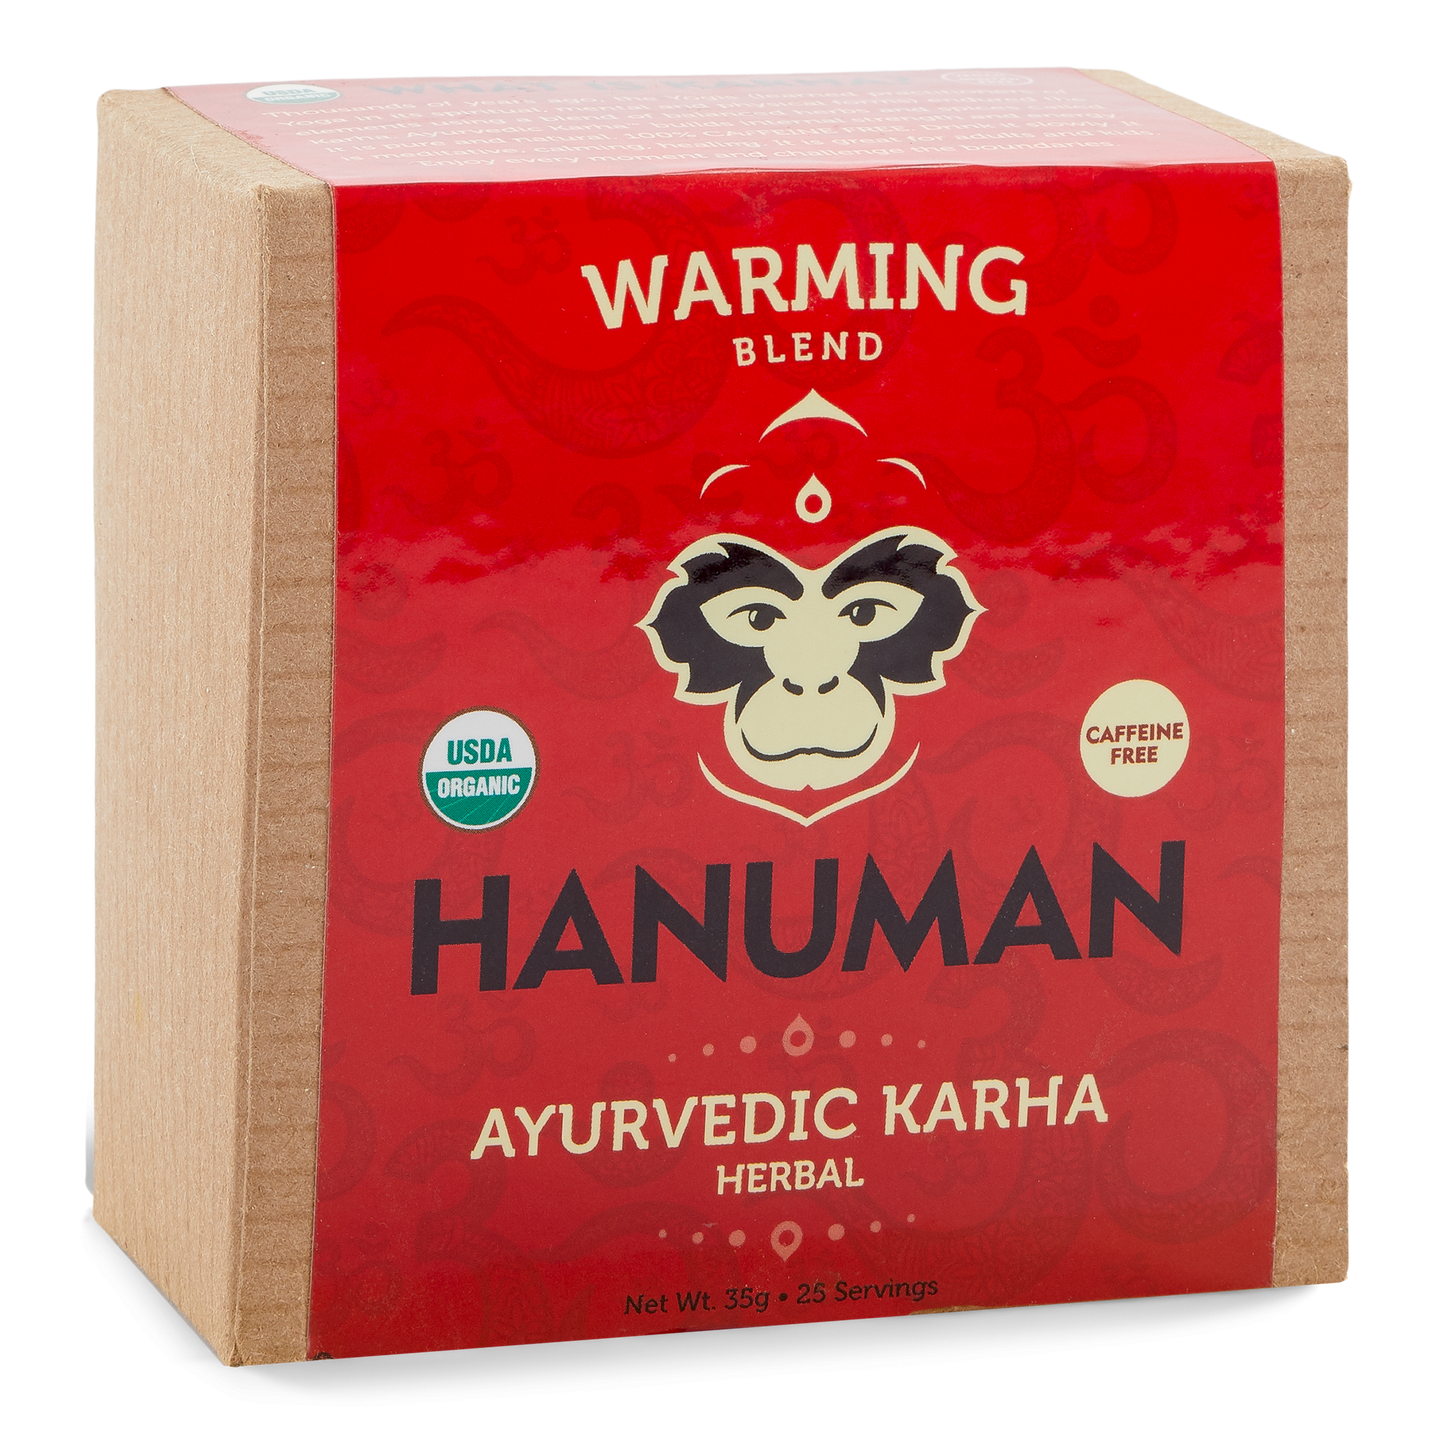 Ayurvedic & Organic Karha: Warming (Spices, No Caffeine)